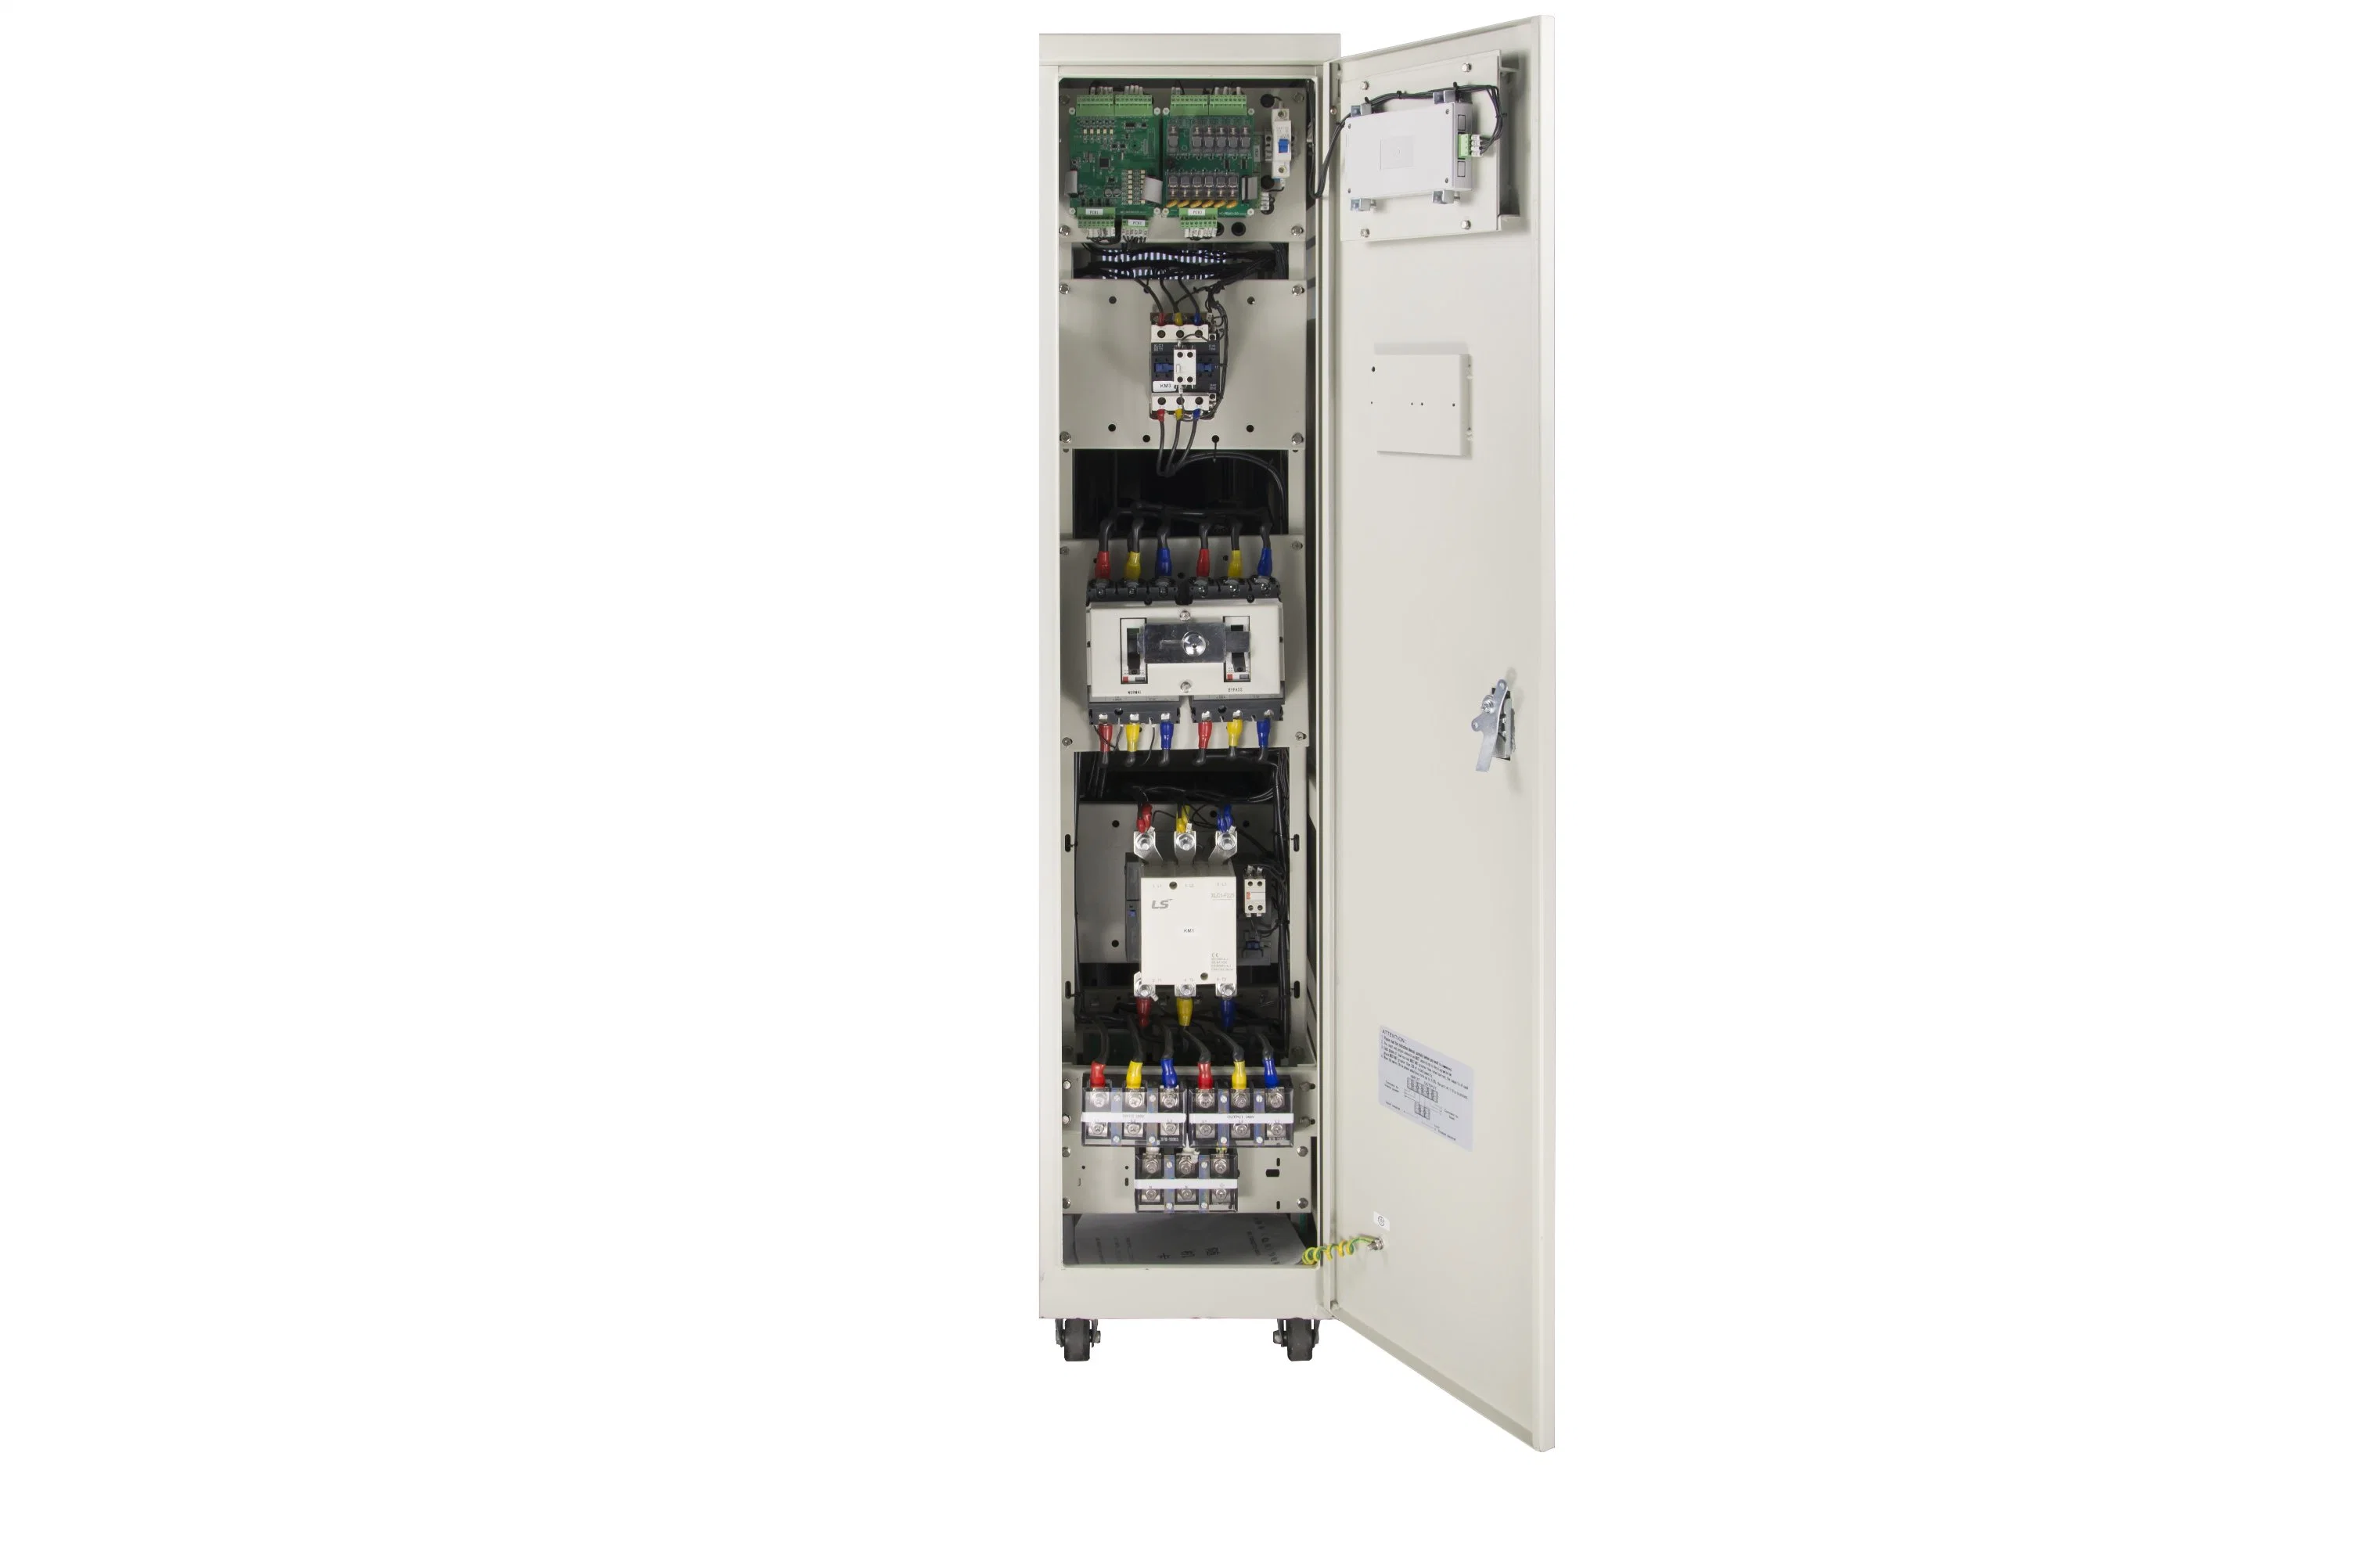 CNC Equipment Specific Power Conditioner (SBW-50kVA)